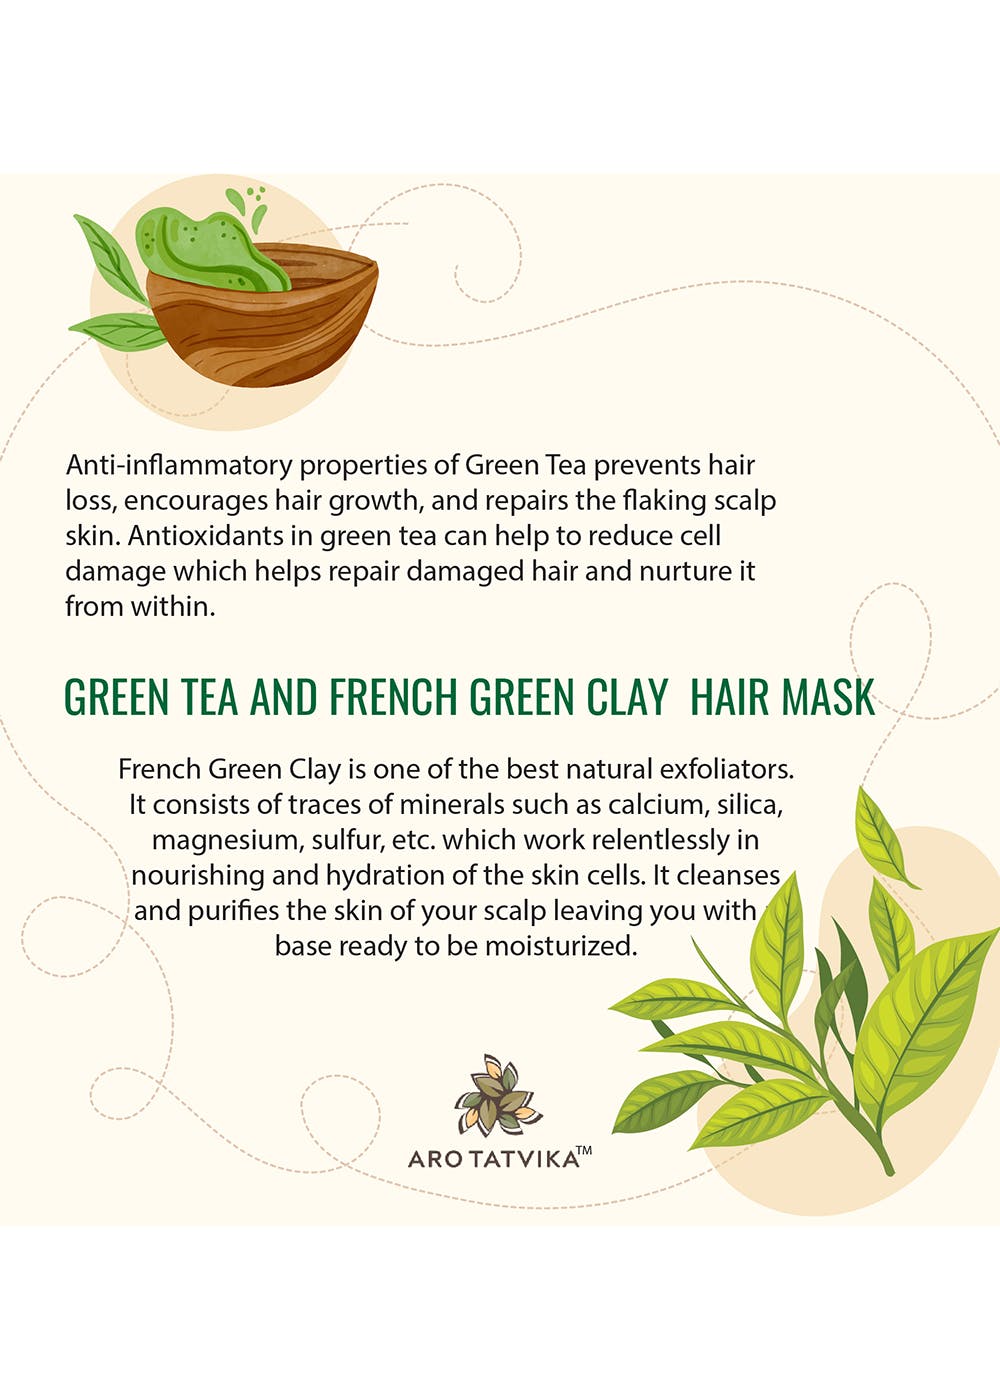 Get Green Tea & French Green Clay Hair Mask - 25ml at ₹ 60 | LBB Shop